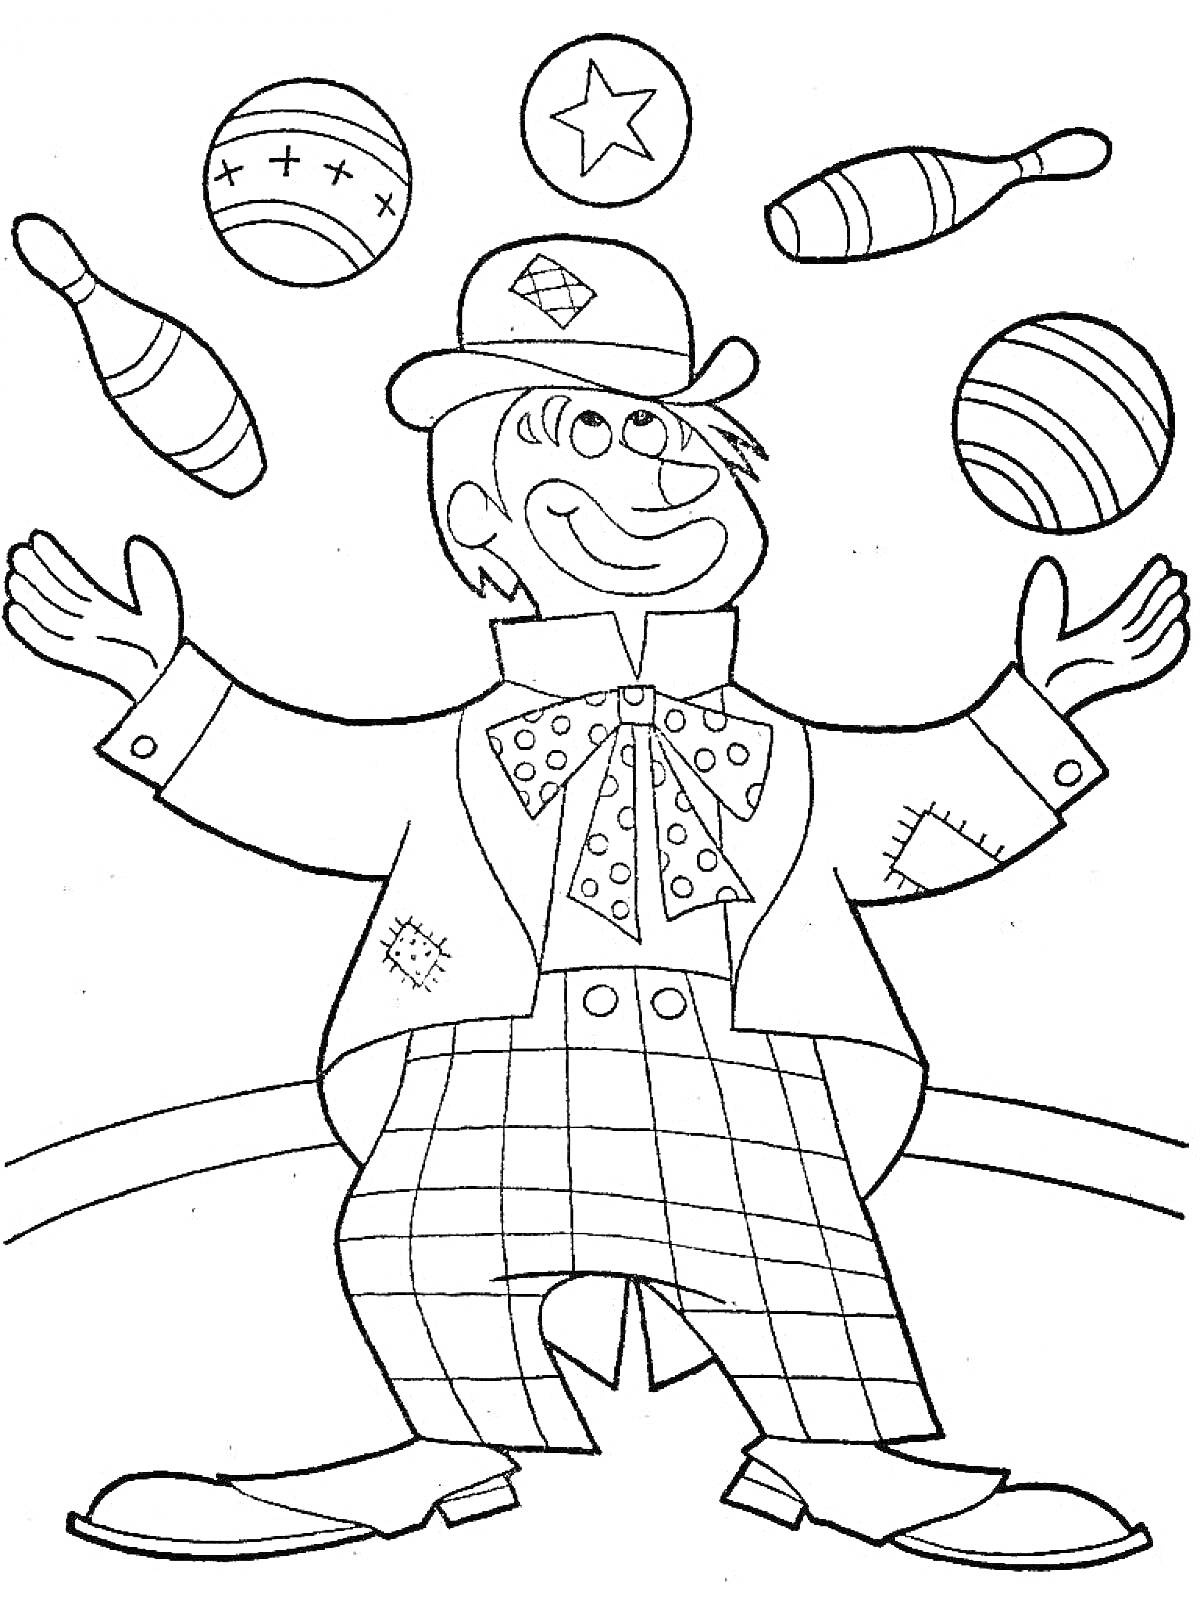 Раскраска Клоун, жонглирующий тремя предметами на арене, в клетчатых брюках и костюме с заплатками на локтях и кнопки